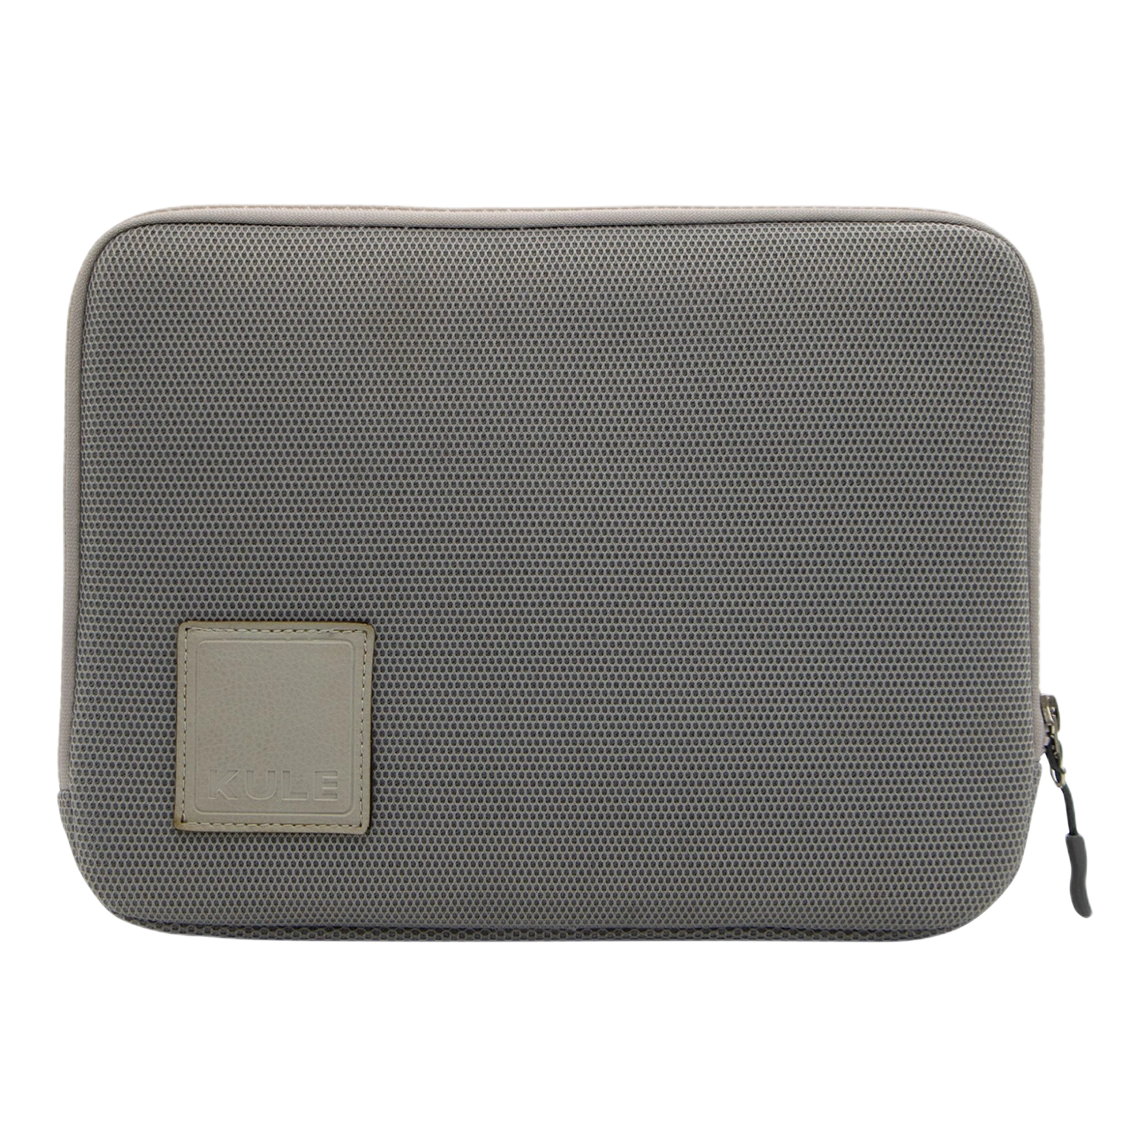 Kule Laptop Sleeve 15-inch KL1550